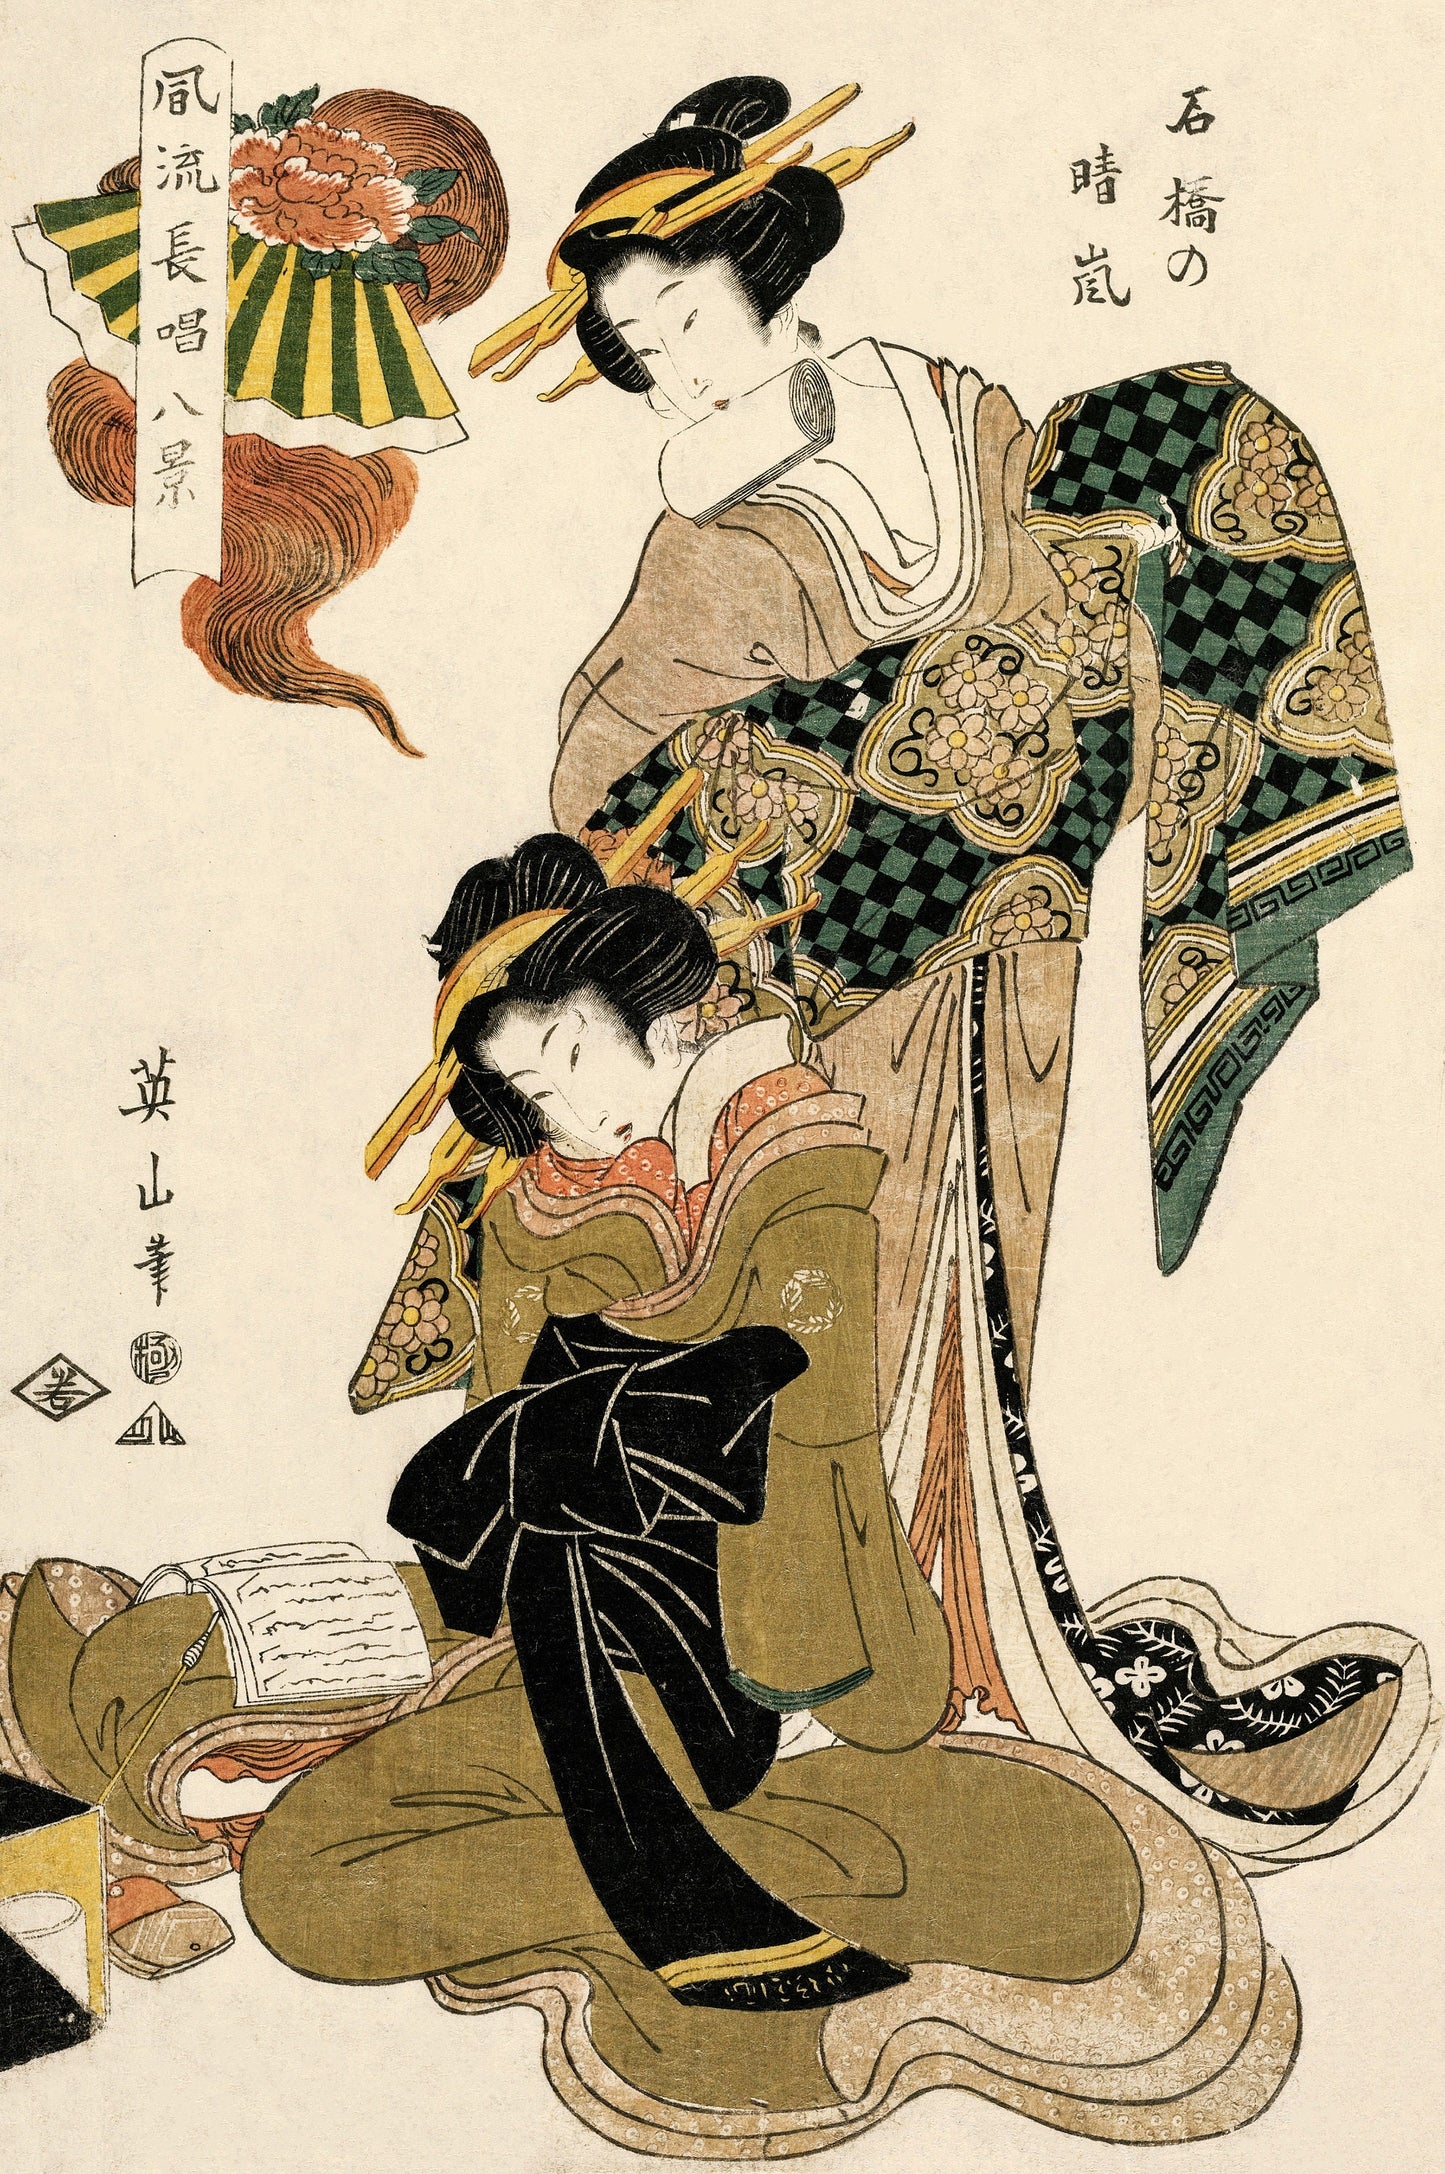 Kikukawa Eizan Courtesan & Beauties Woodblock Prints [18 Images]